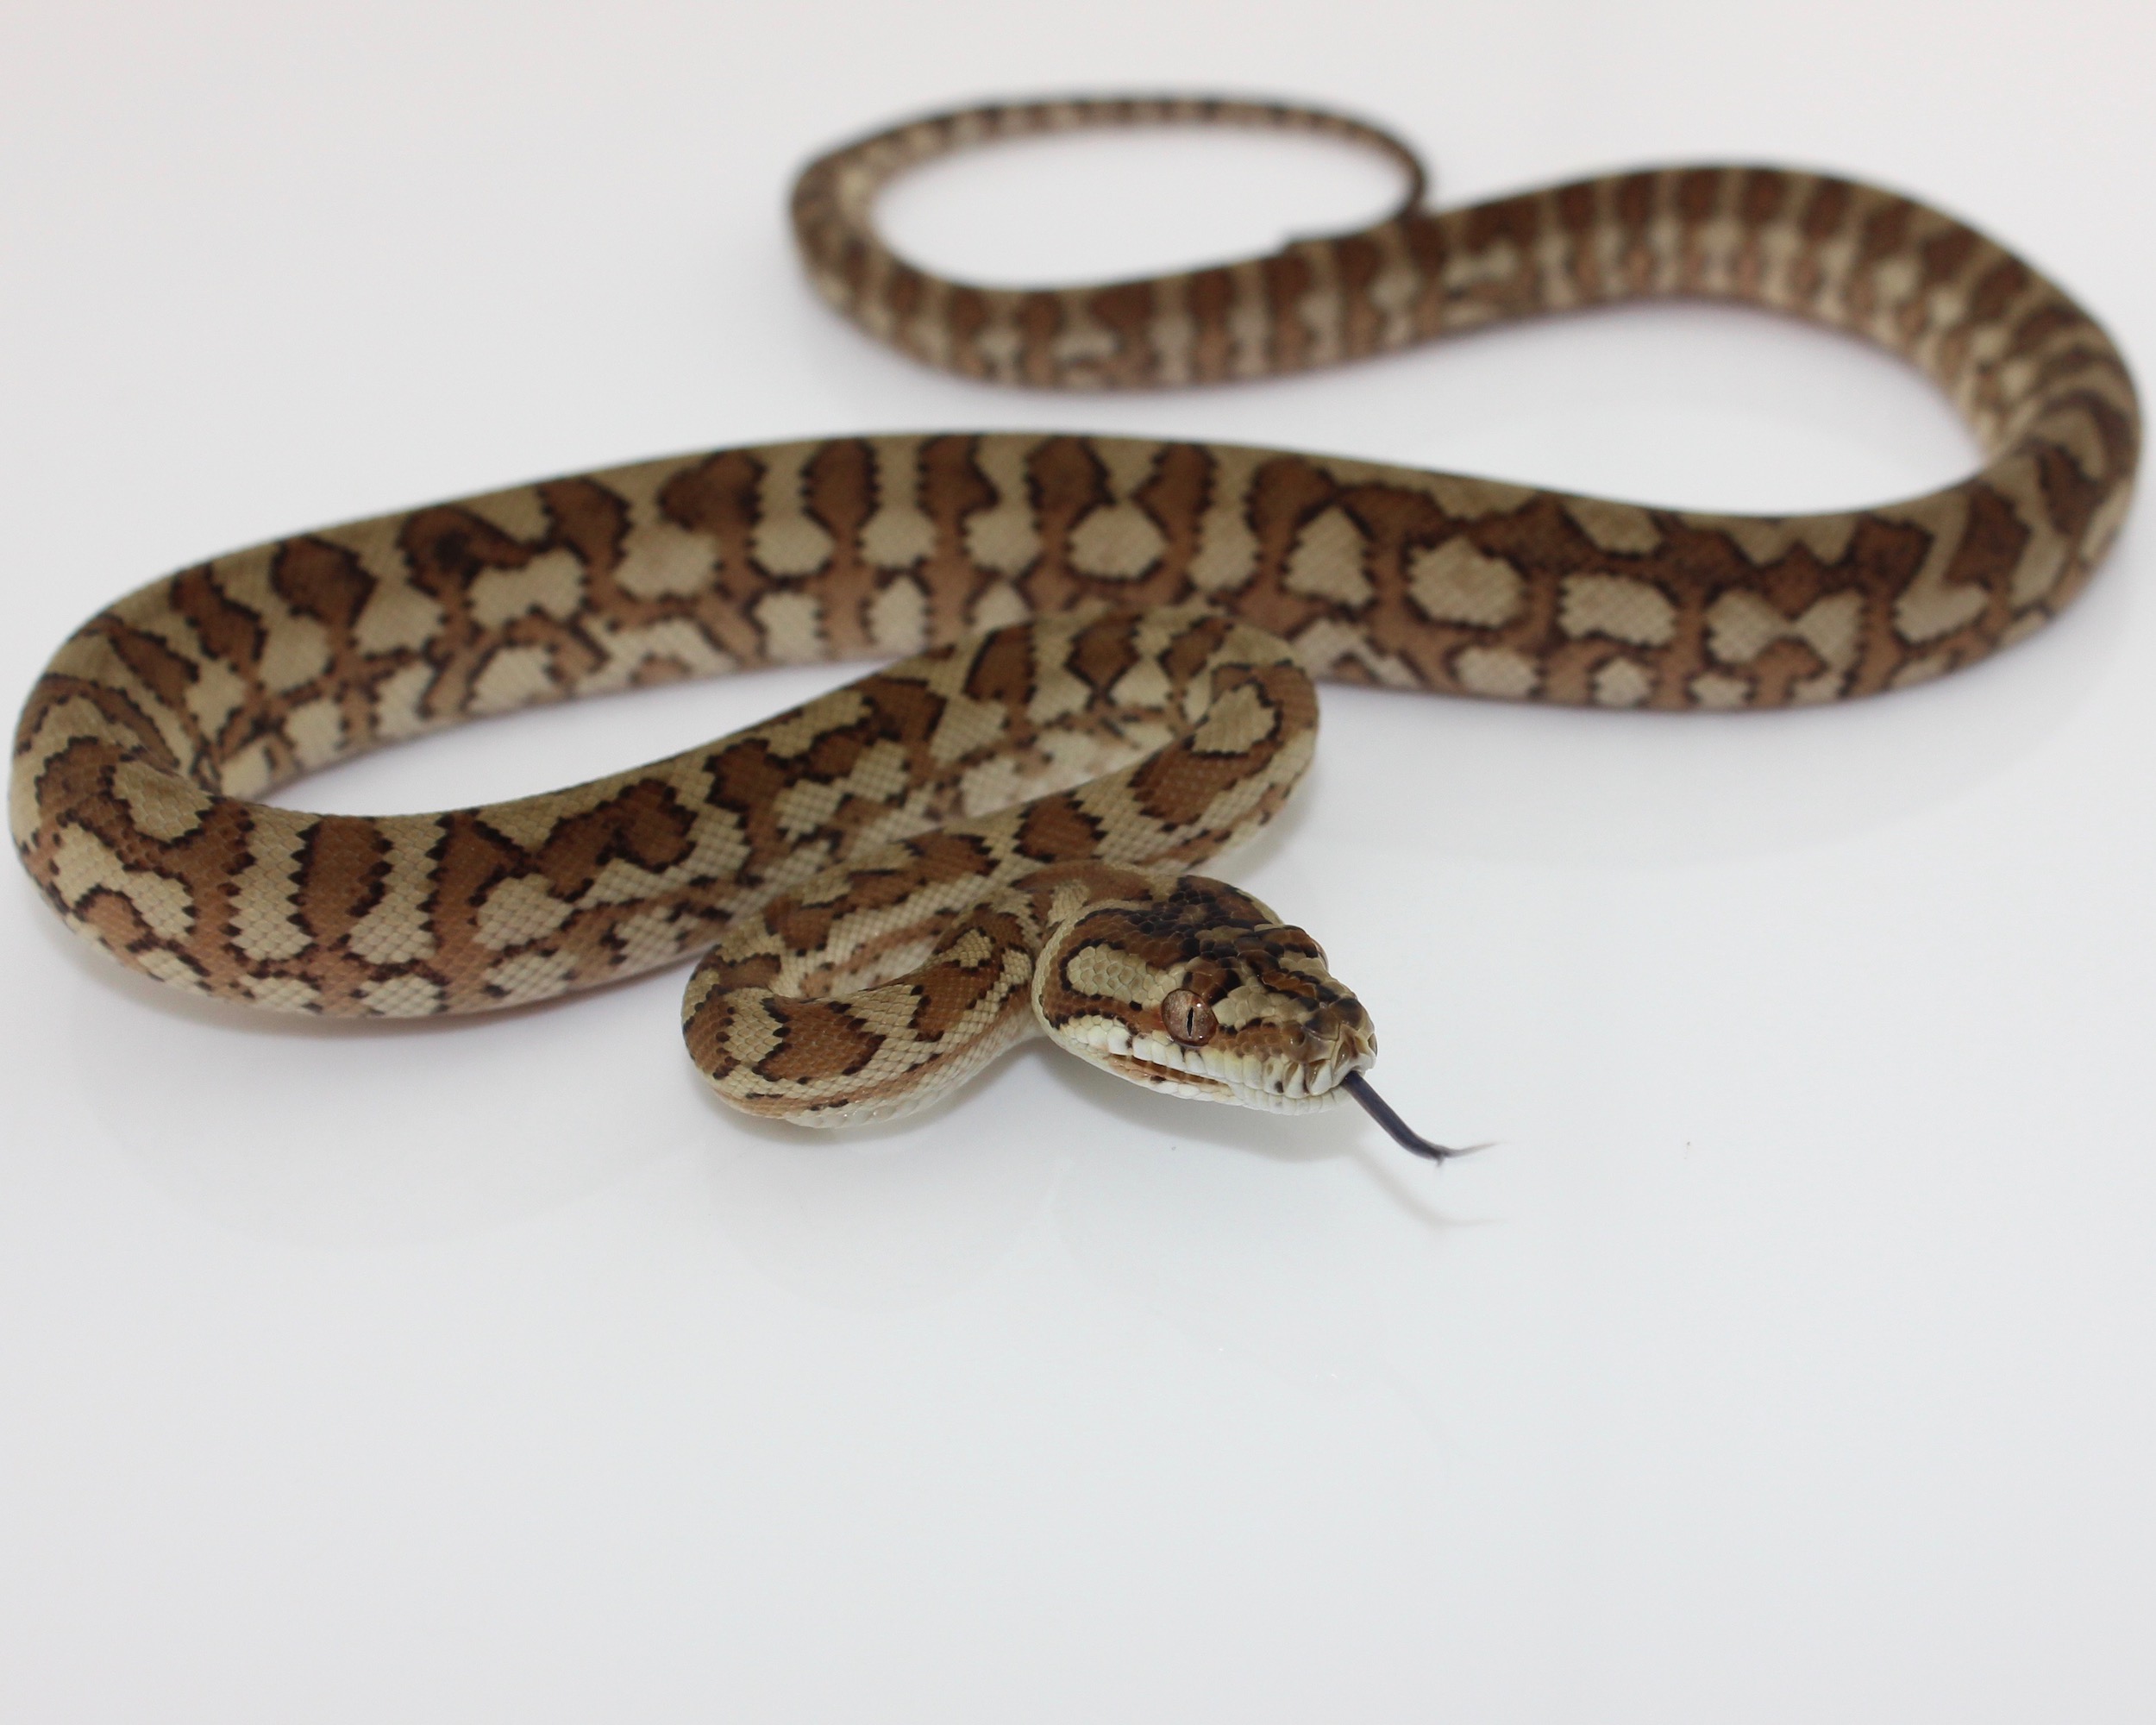 Caramel Coastal Carpet Python by Rogue-Reptiles